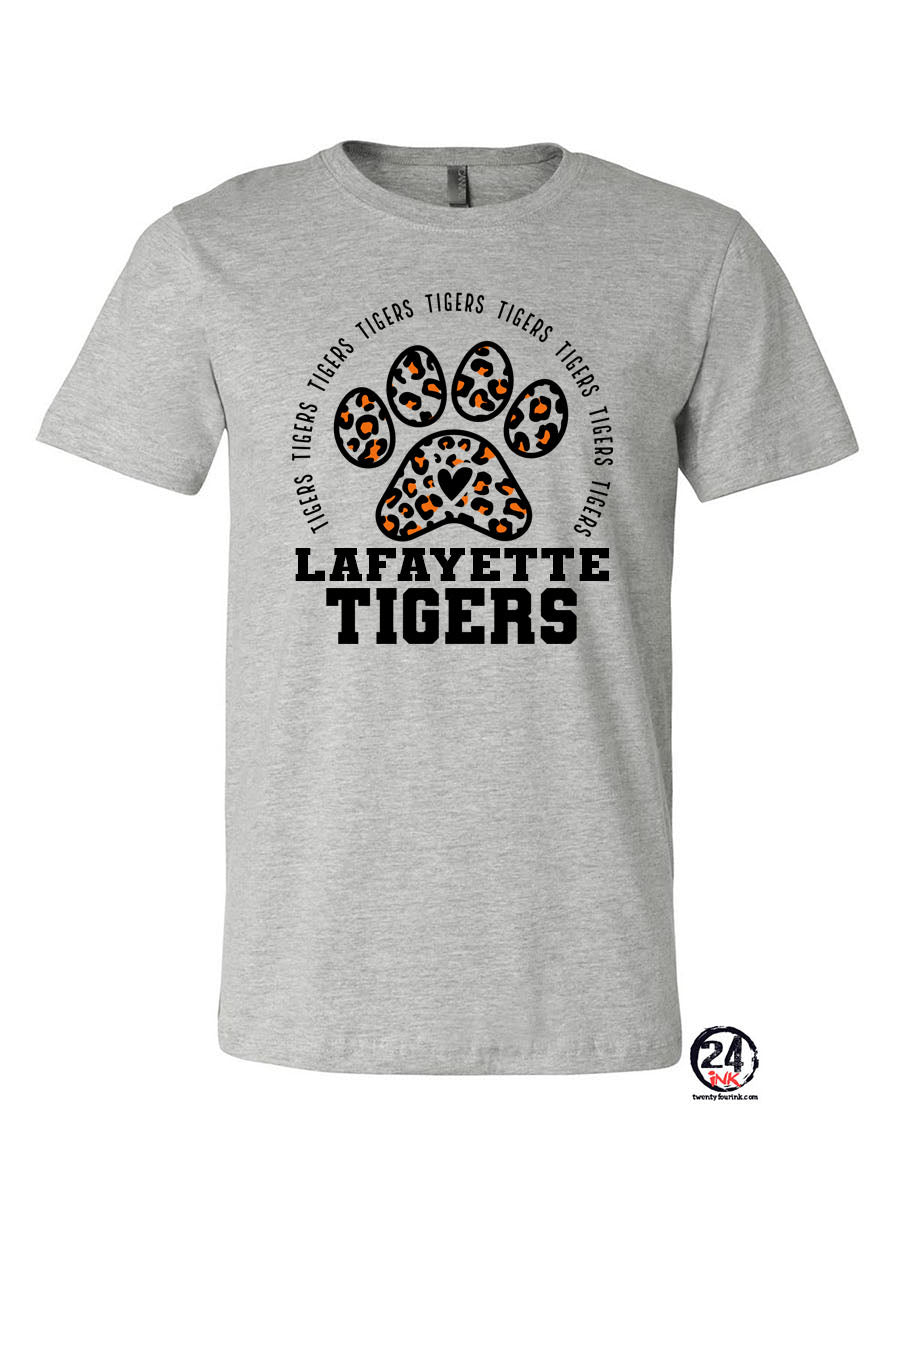 Tigers Design 9 T-Shirt